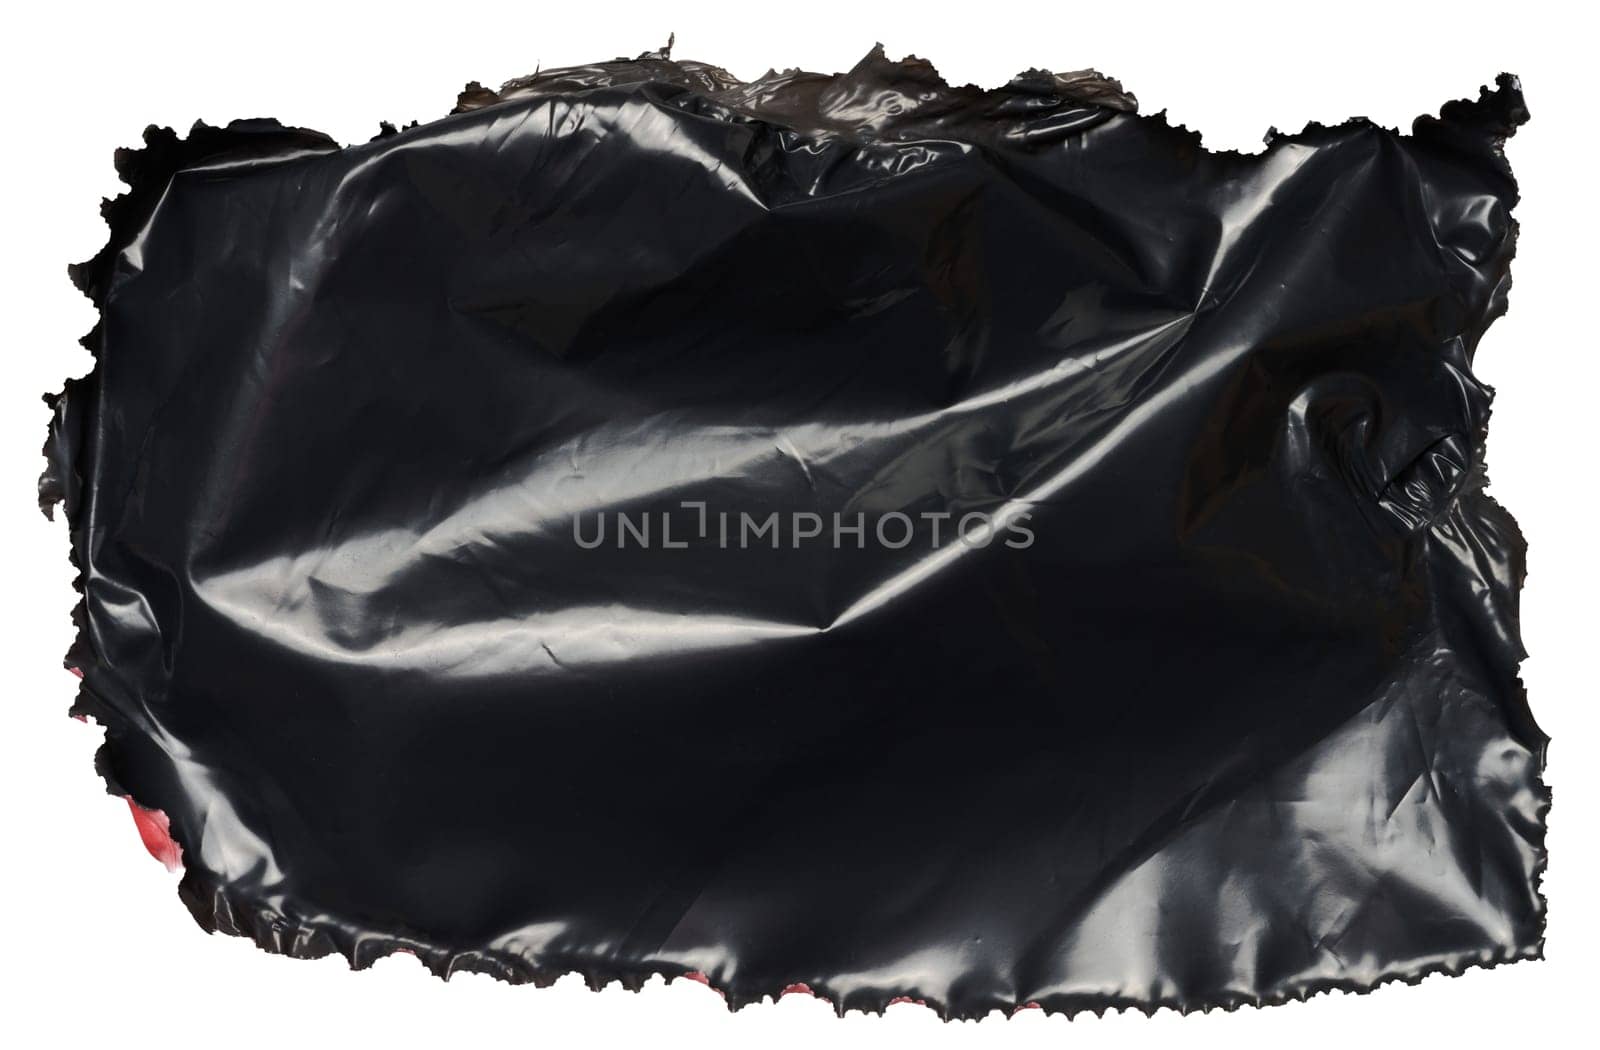 Torn piece of black polyethylene on isolated background by ndanko